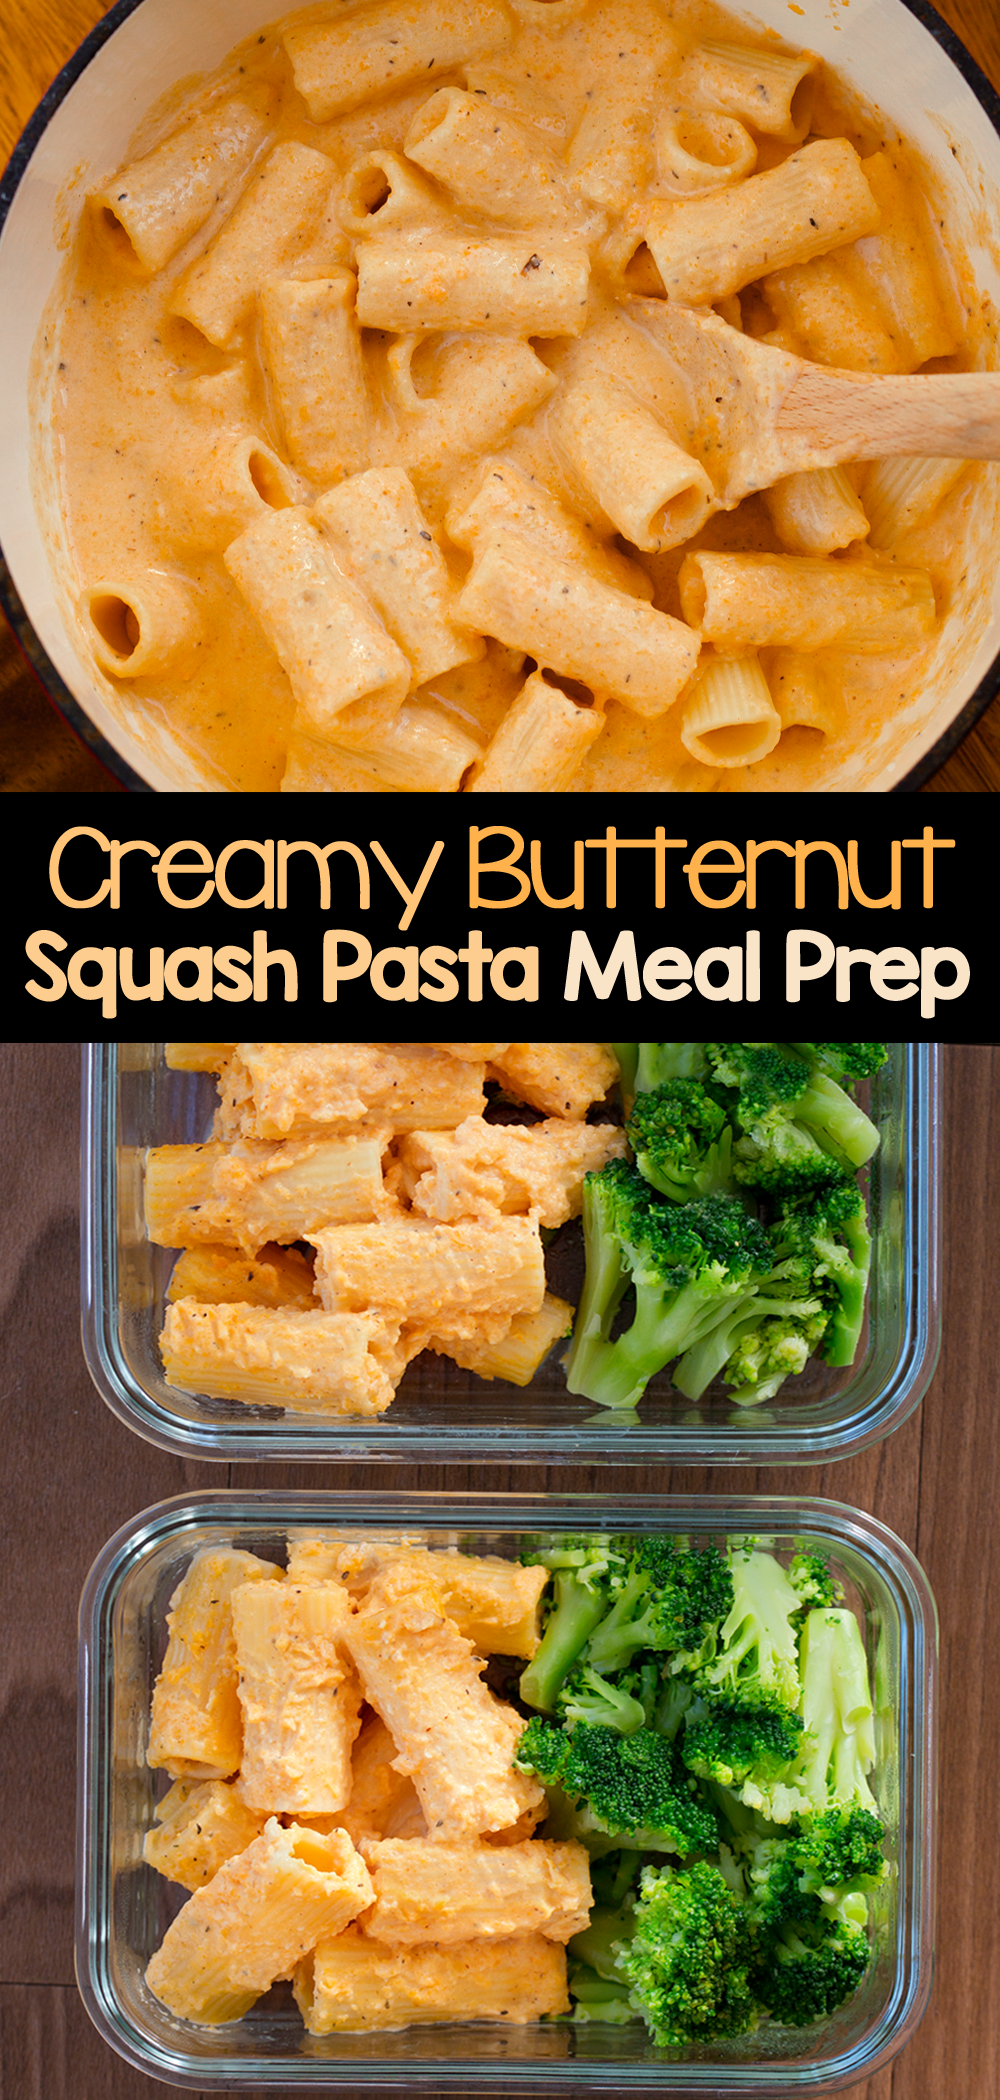 Creamy Butternut Squash Pasta Meal Prep Lunch Recipes - Butternut Squash Pasta Recipe - Creamy, Healthy, Delicious